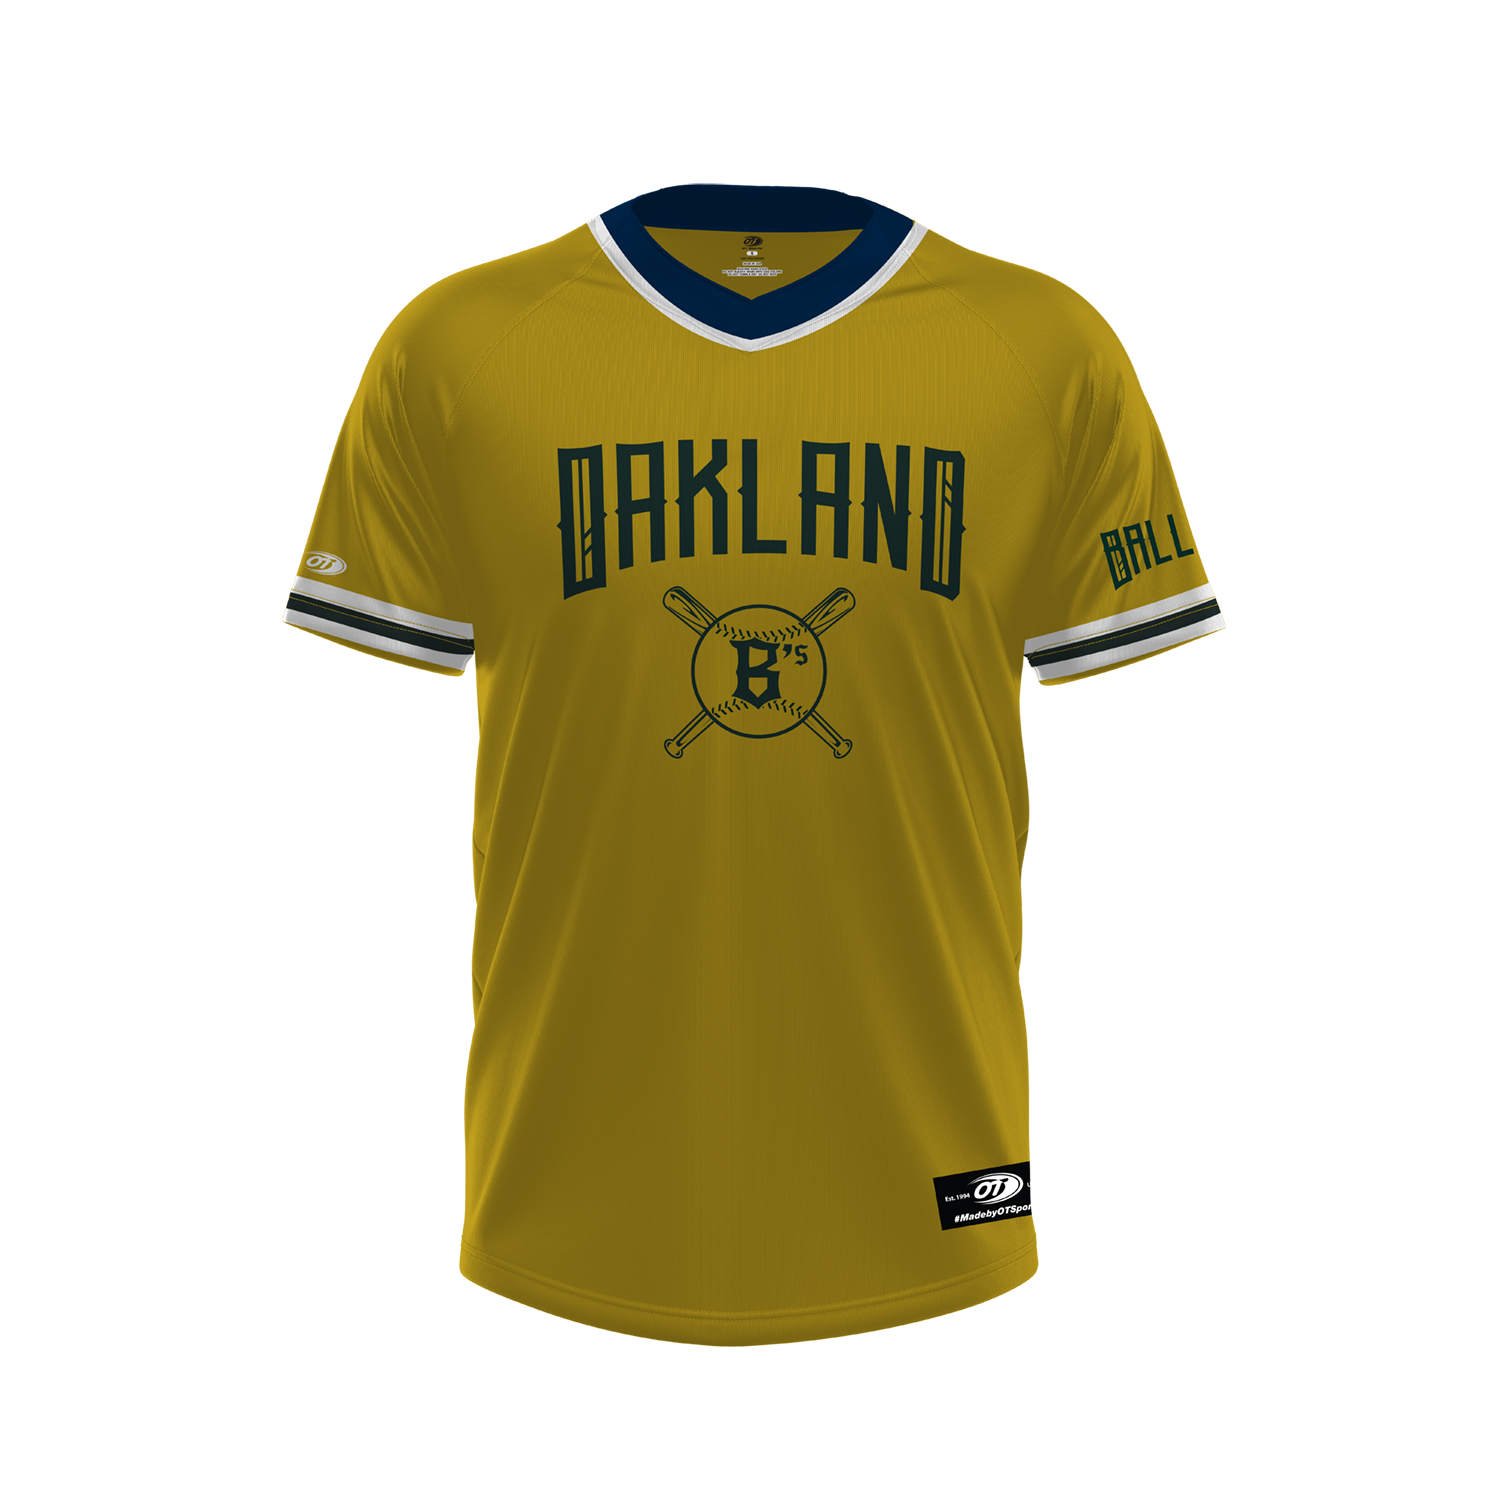 Oakland Ballers Alternate Jersey